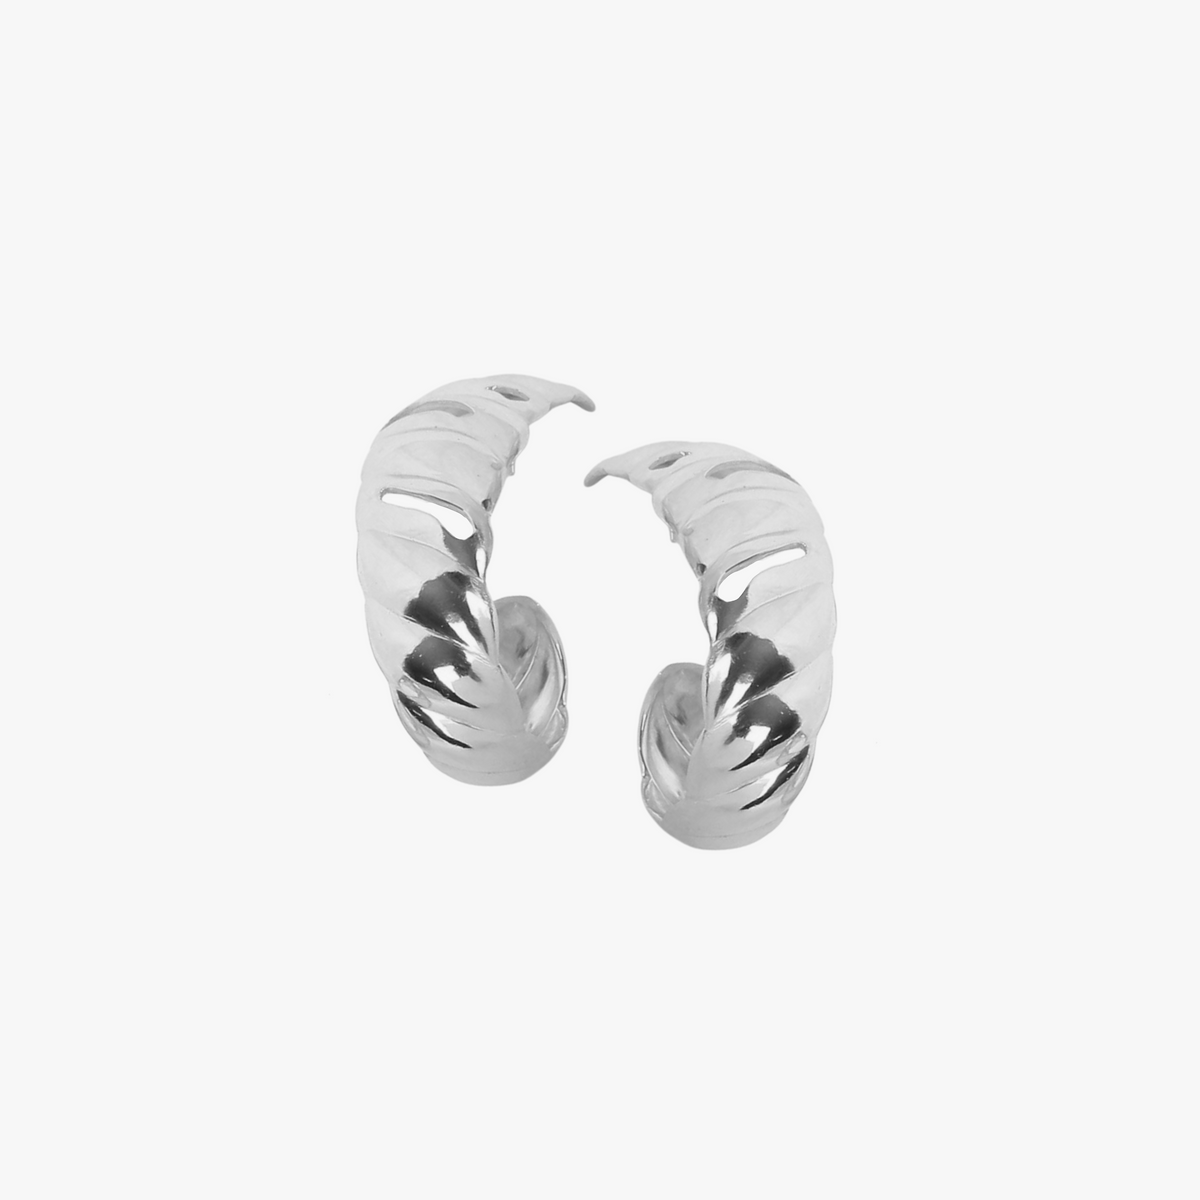 Aqua Swirl Earrings - Silver Tone